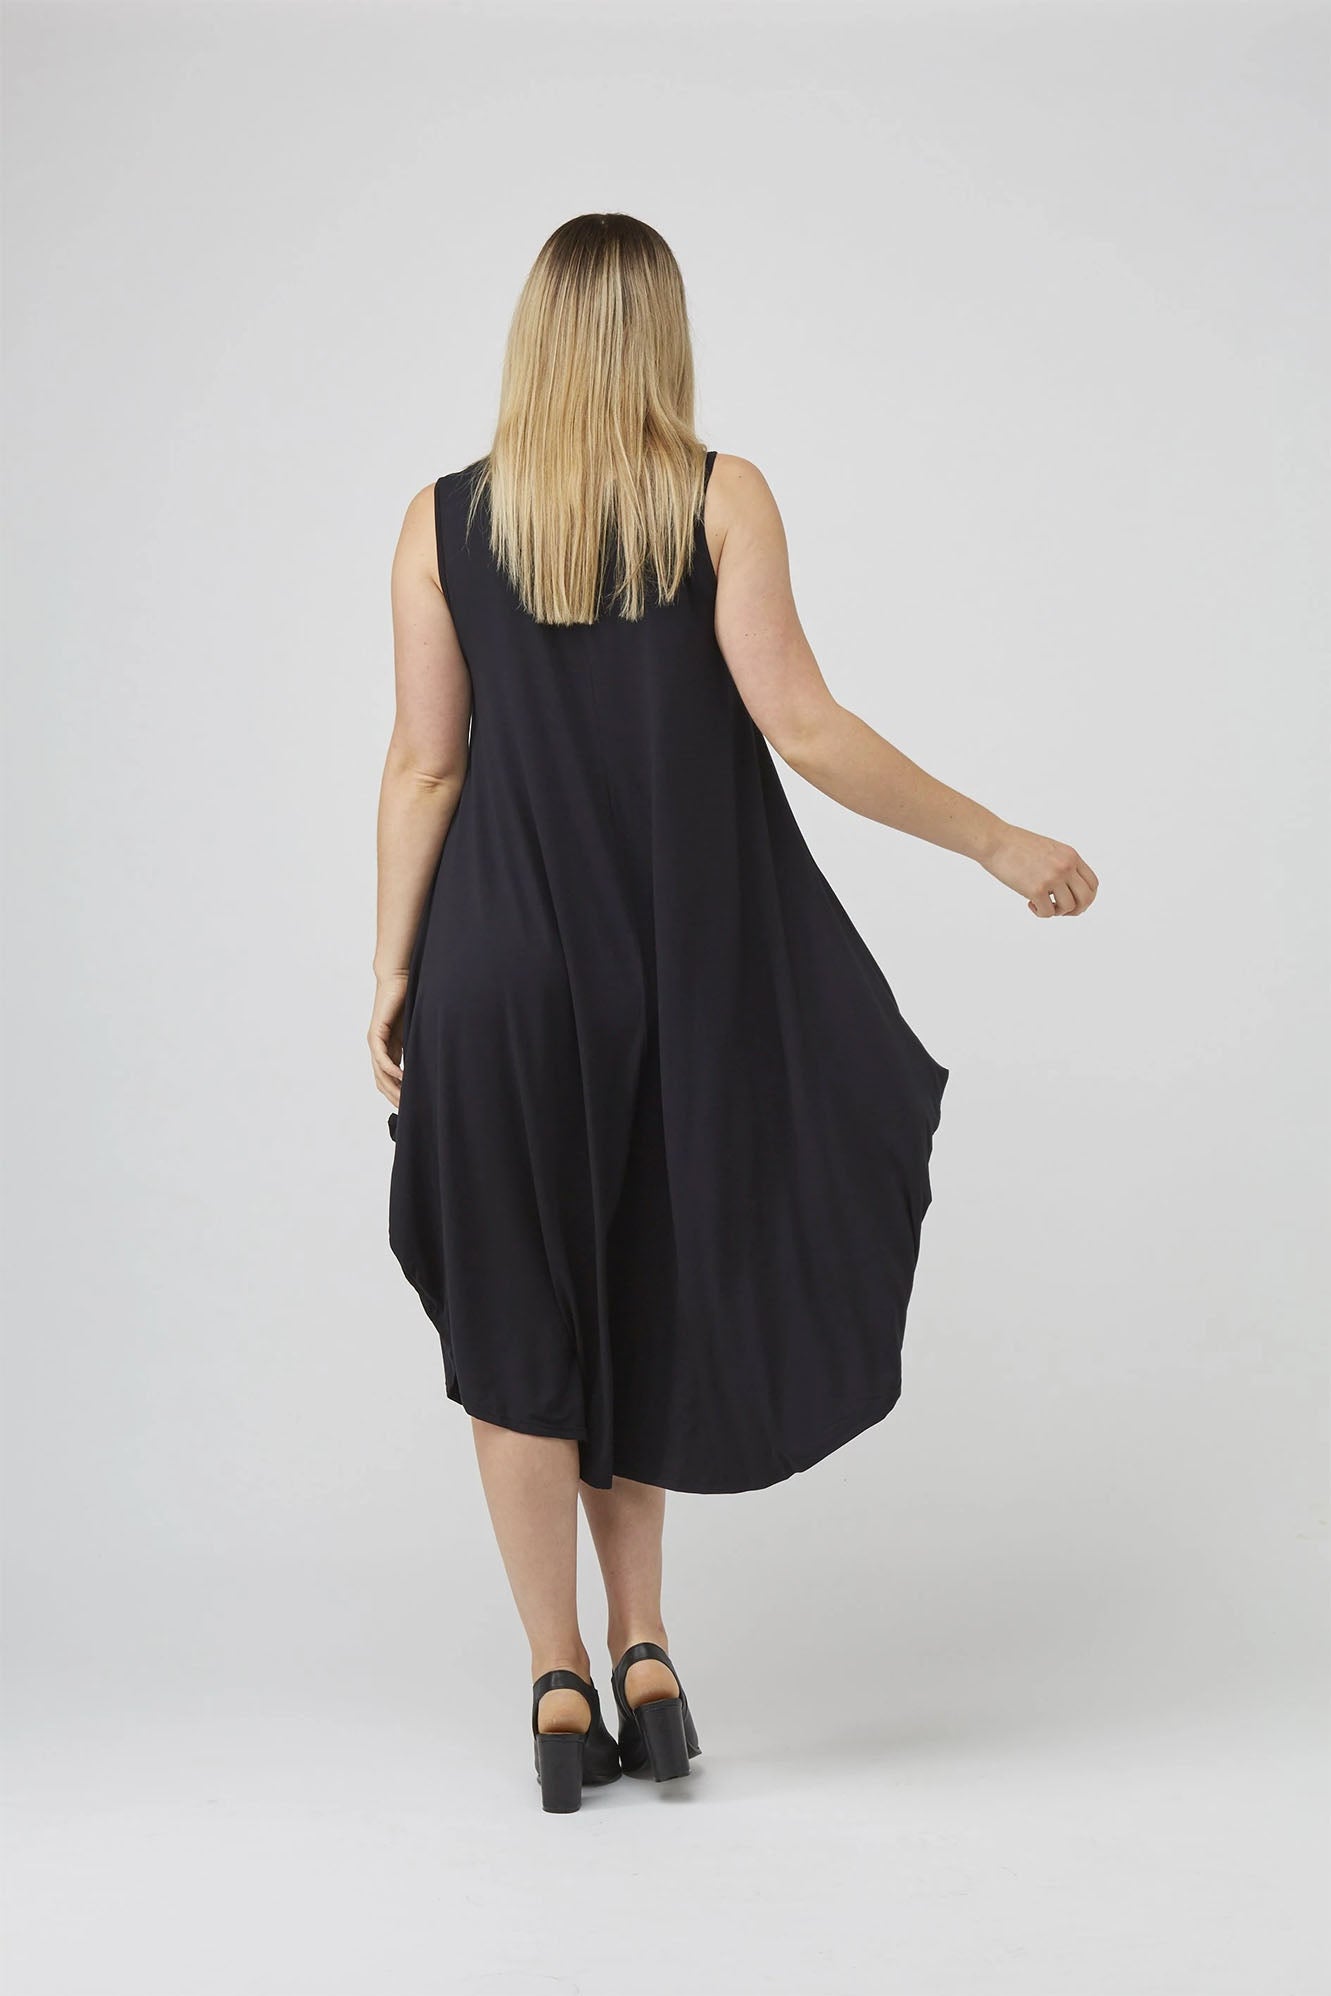 Woman wearing black Tani Sleeveless Tri Dress 79432 back view